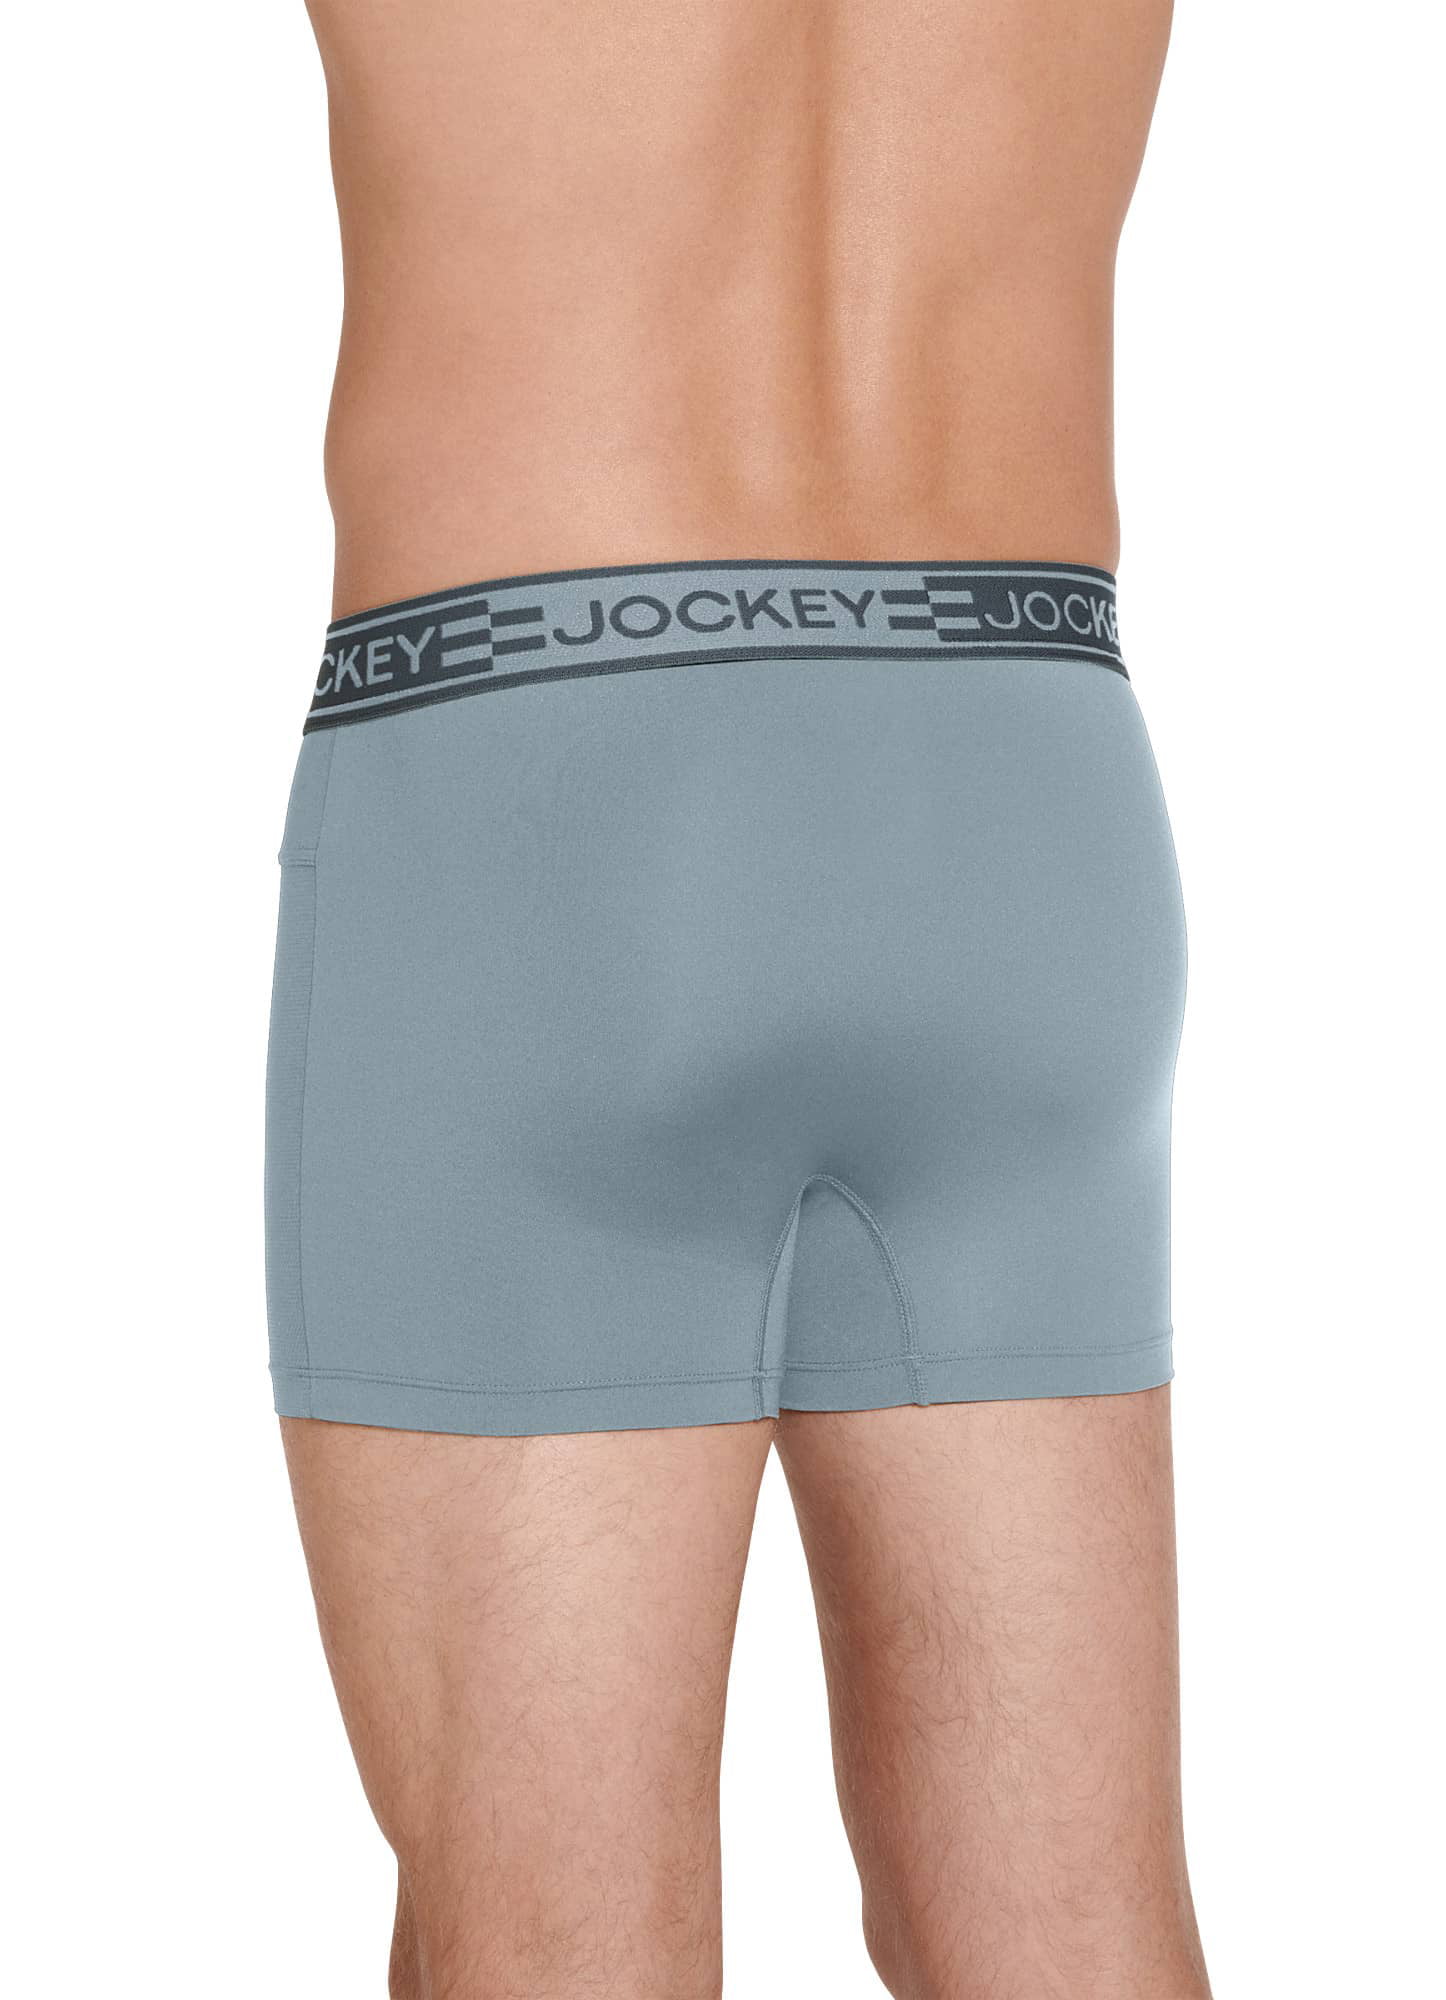 44.96% OFF on JOCKEY UNDERWEAR Grey Jockey Underwear KU 500708H T